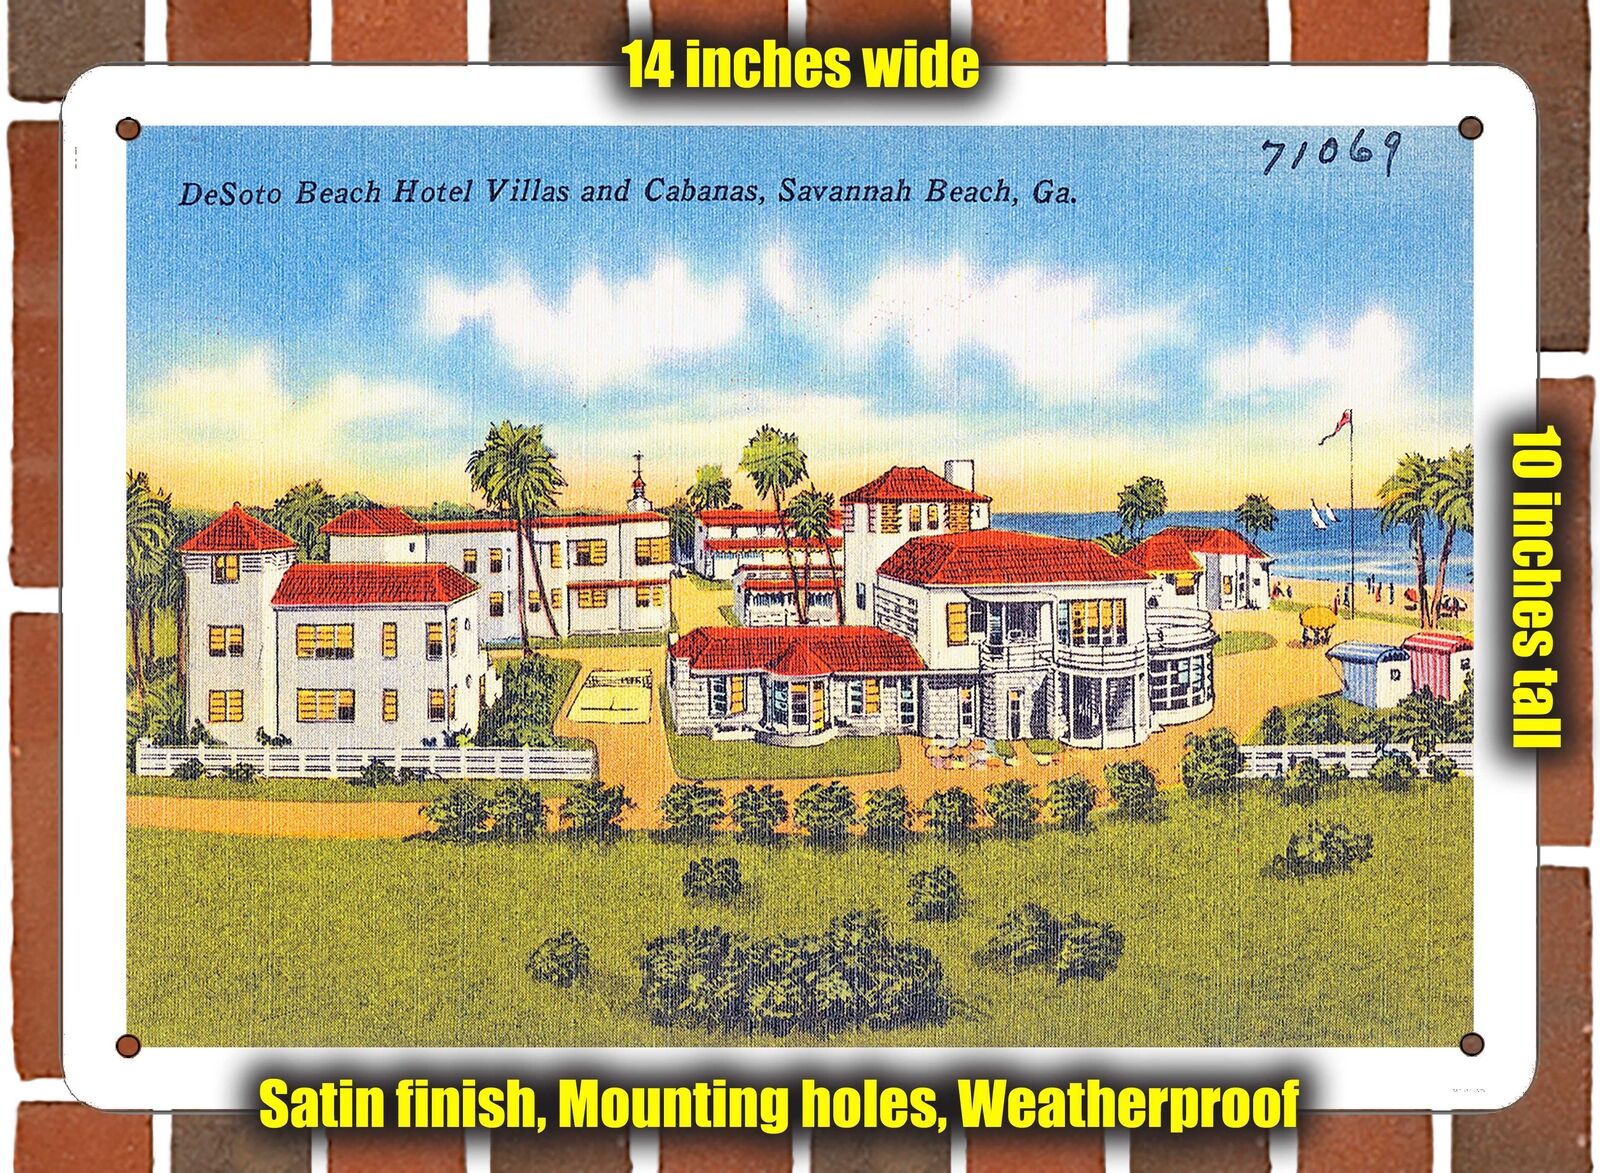 METAL SIGN - Georgia Postcard - Desoto Beach Hotel Villas and Cabanas, Savannah